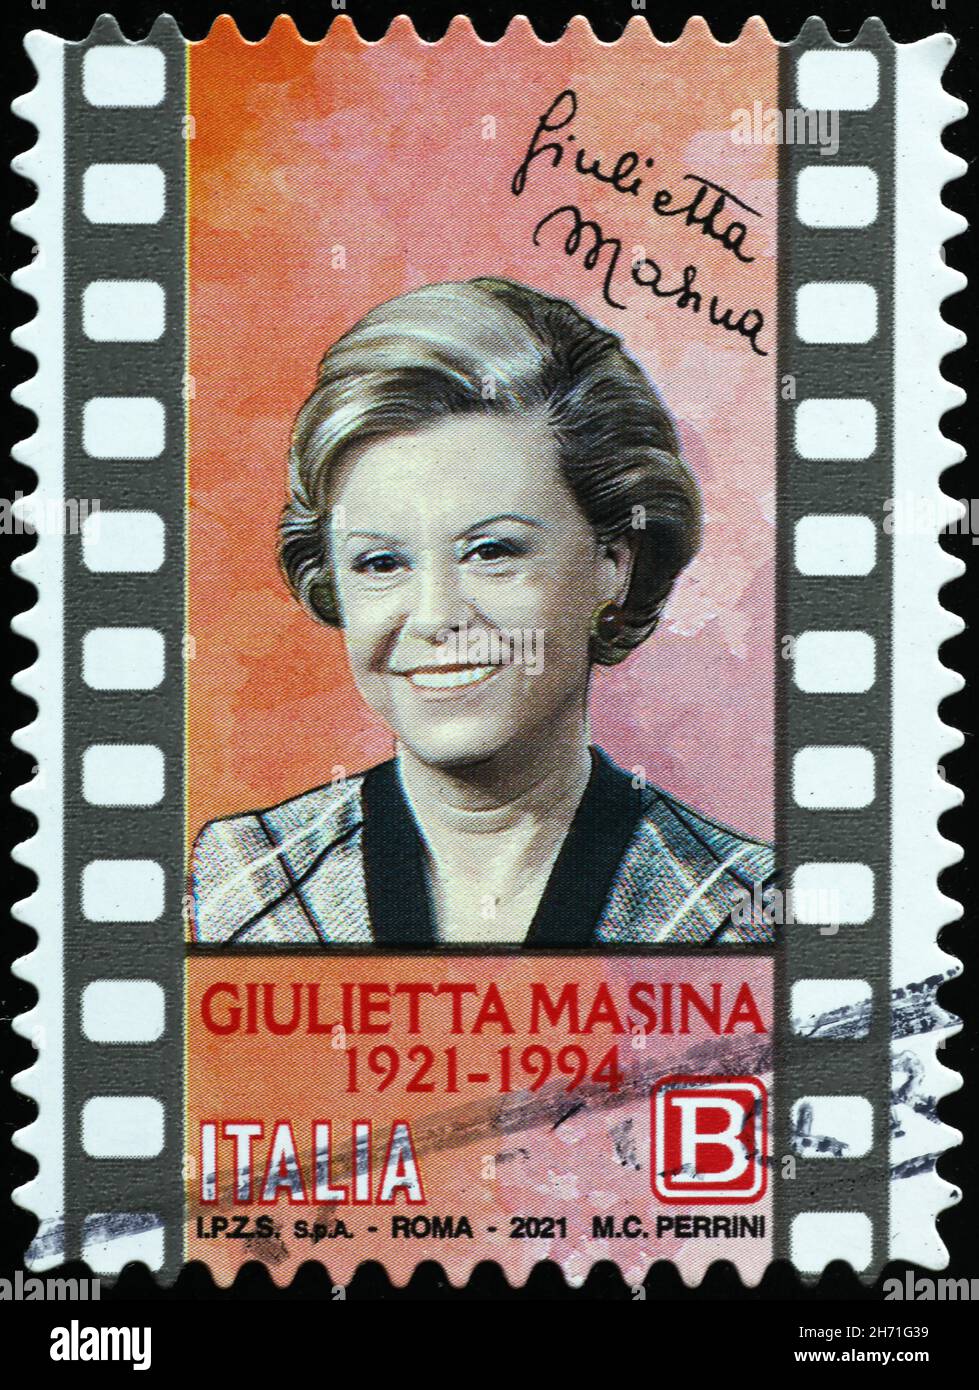 Giulietta masina sur timbre-poste italien Banque D'Images